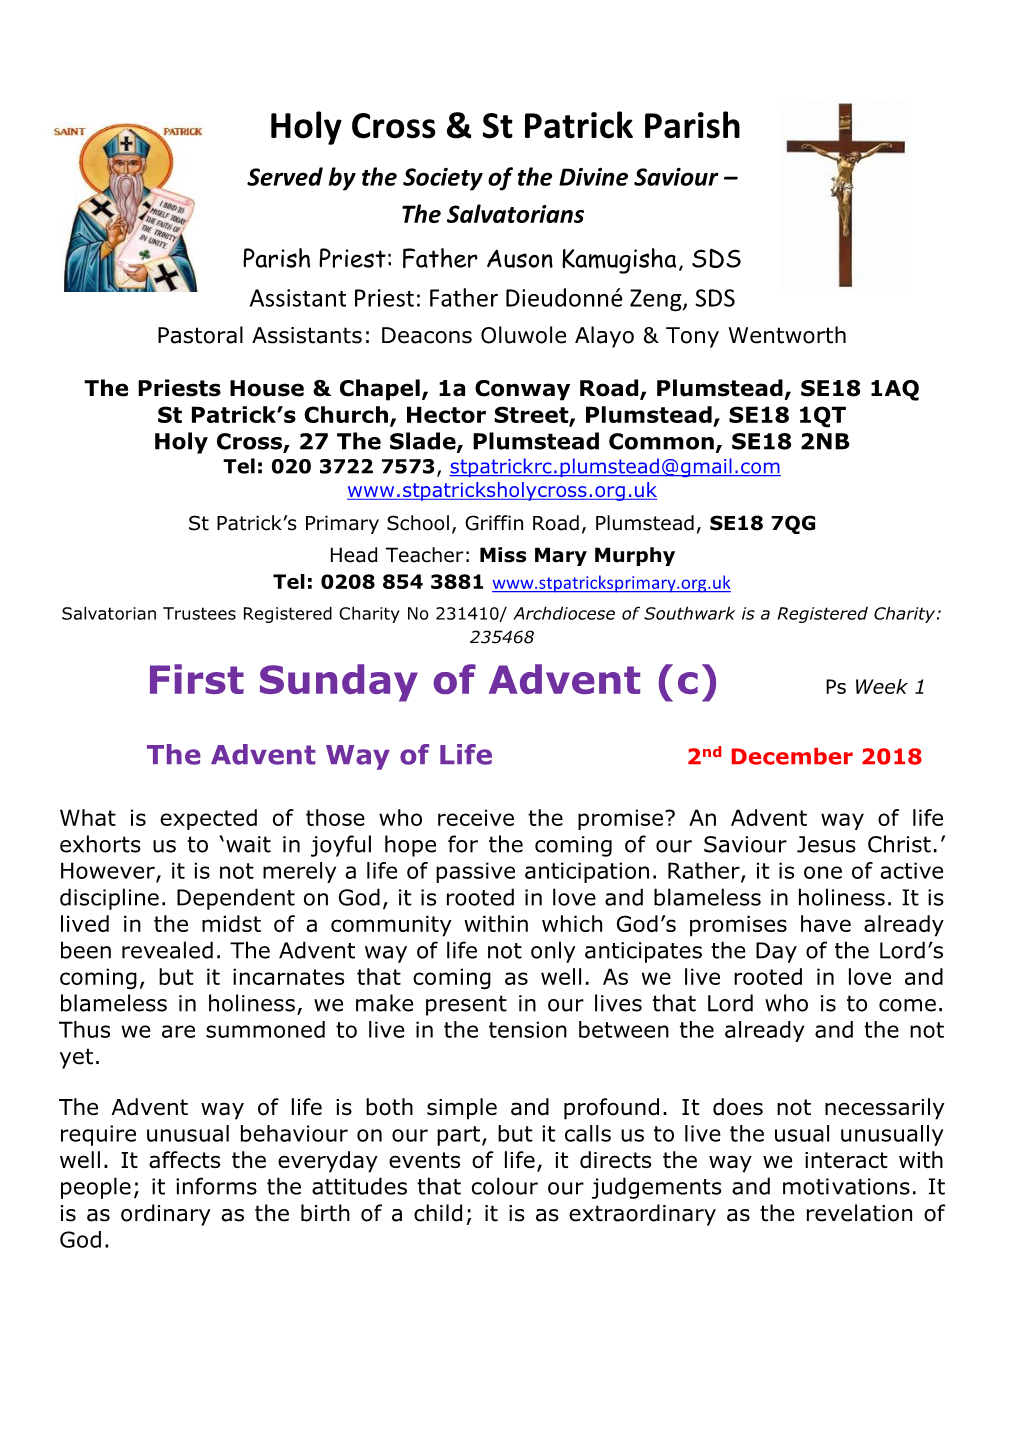 Holy Cross & St Patrick Parish First Sunday of Advent